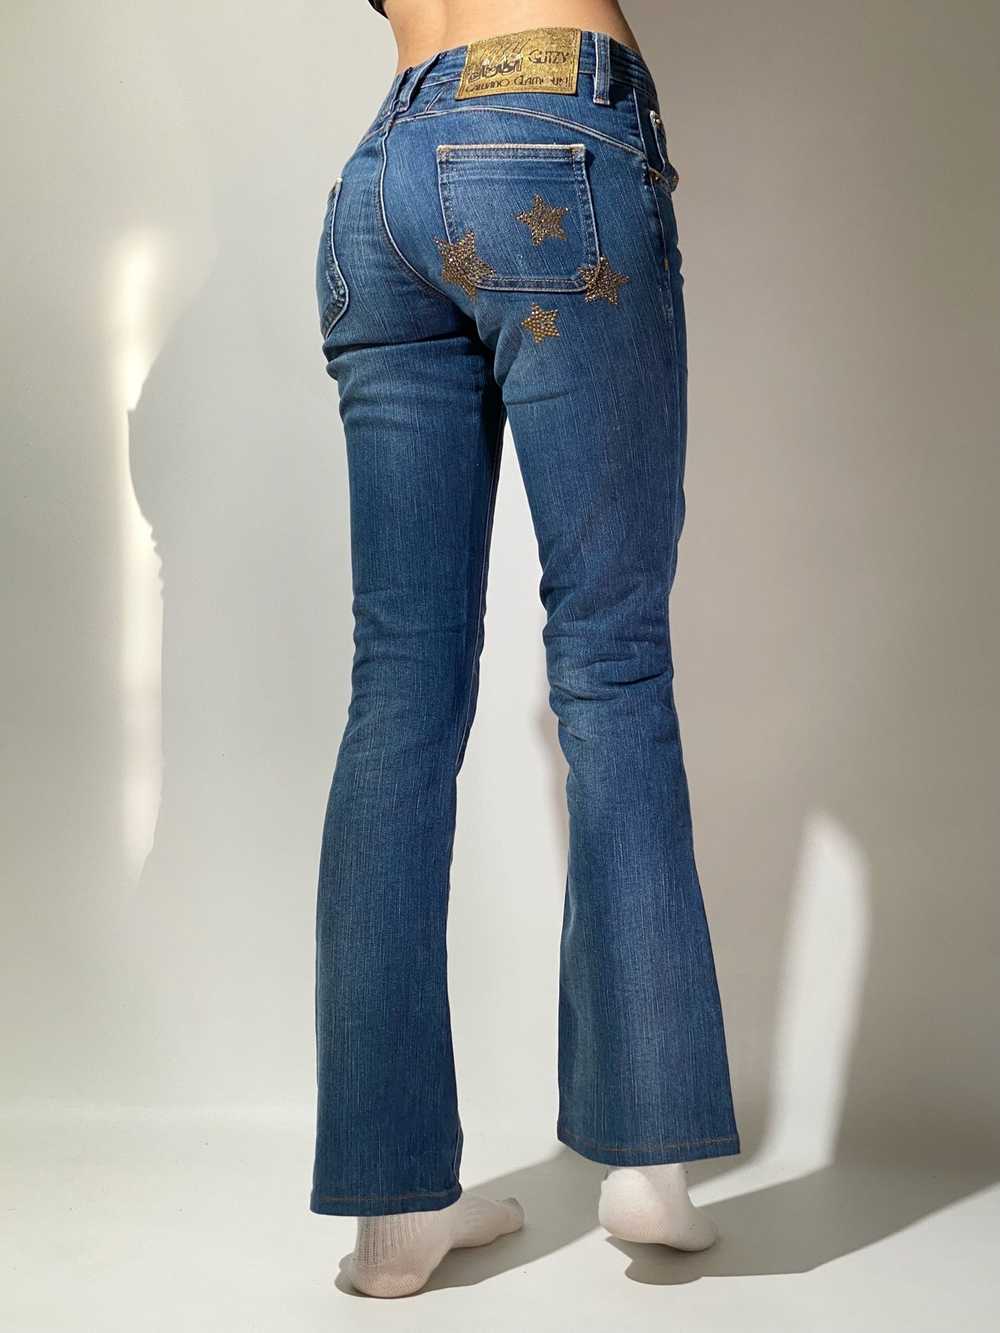 John Galliano John Galliano vintage blue jeans - image 2